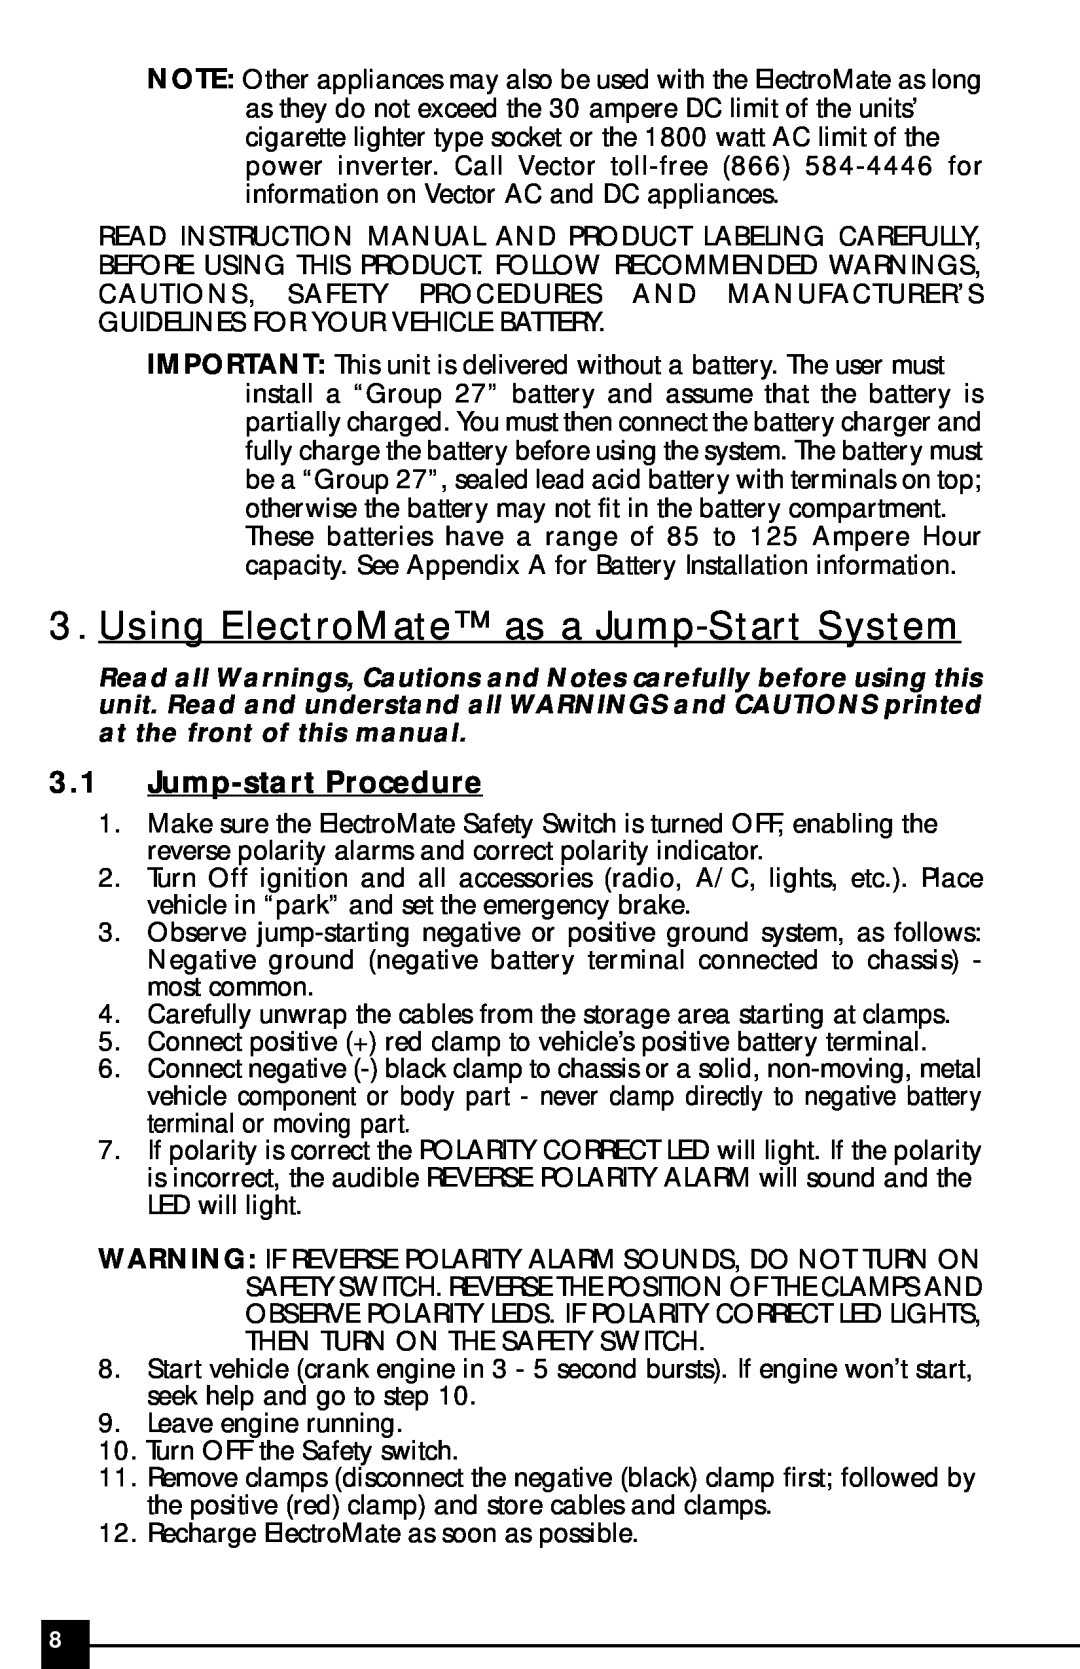 Vector VEC097 owner manual Using ElectroMate as a Jump-StartSystem, 3.1Jump-startProcedure 